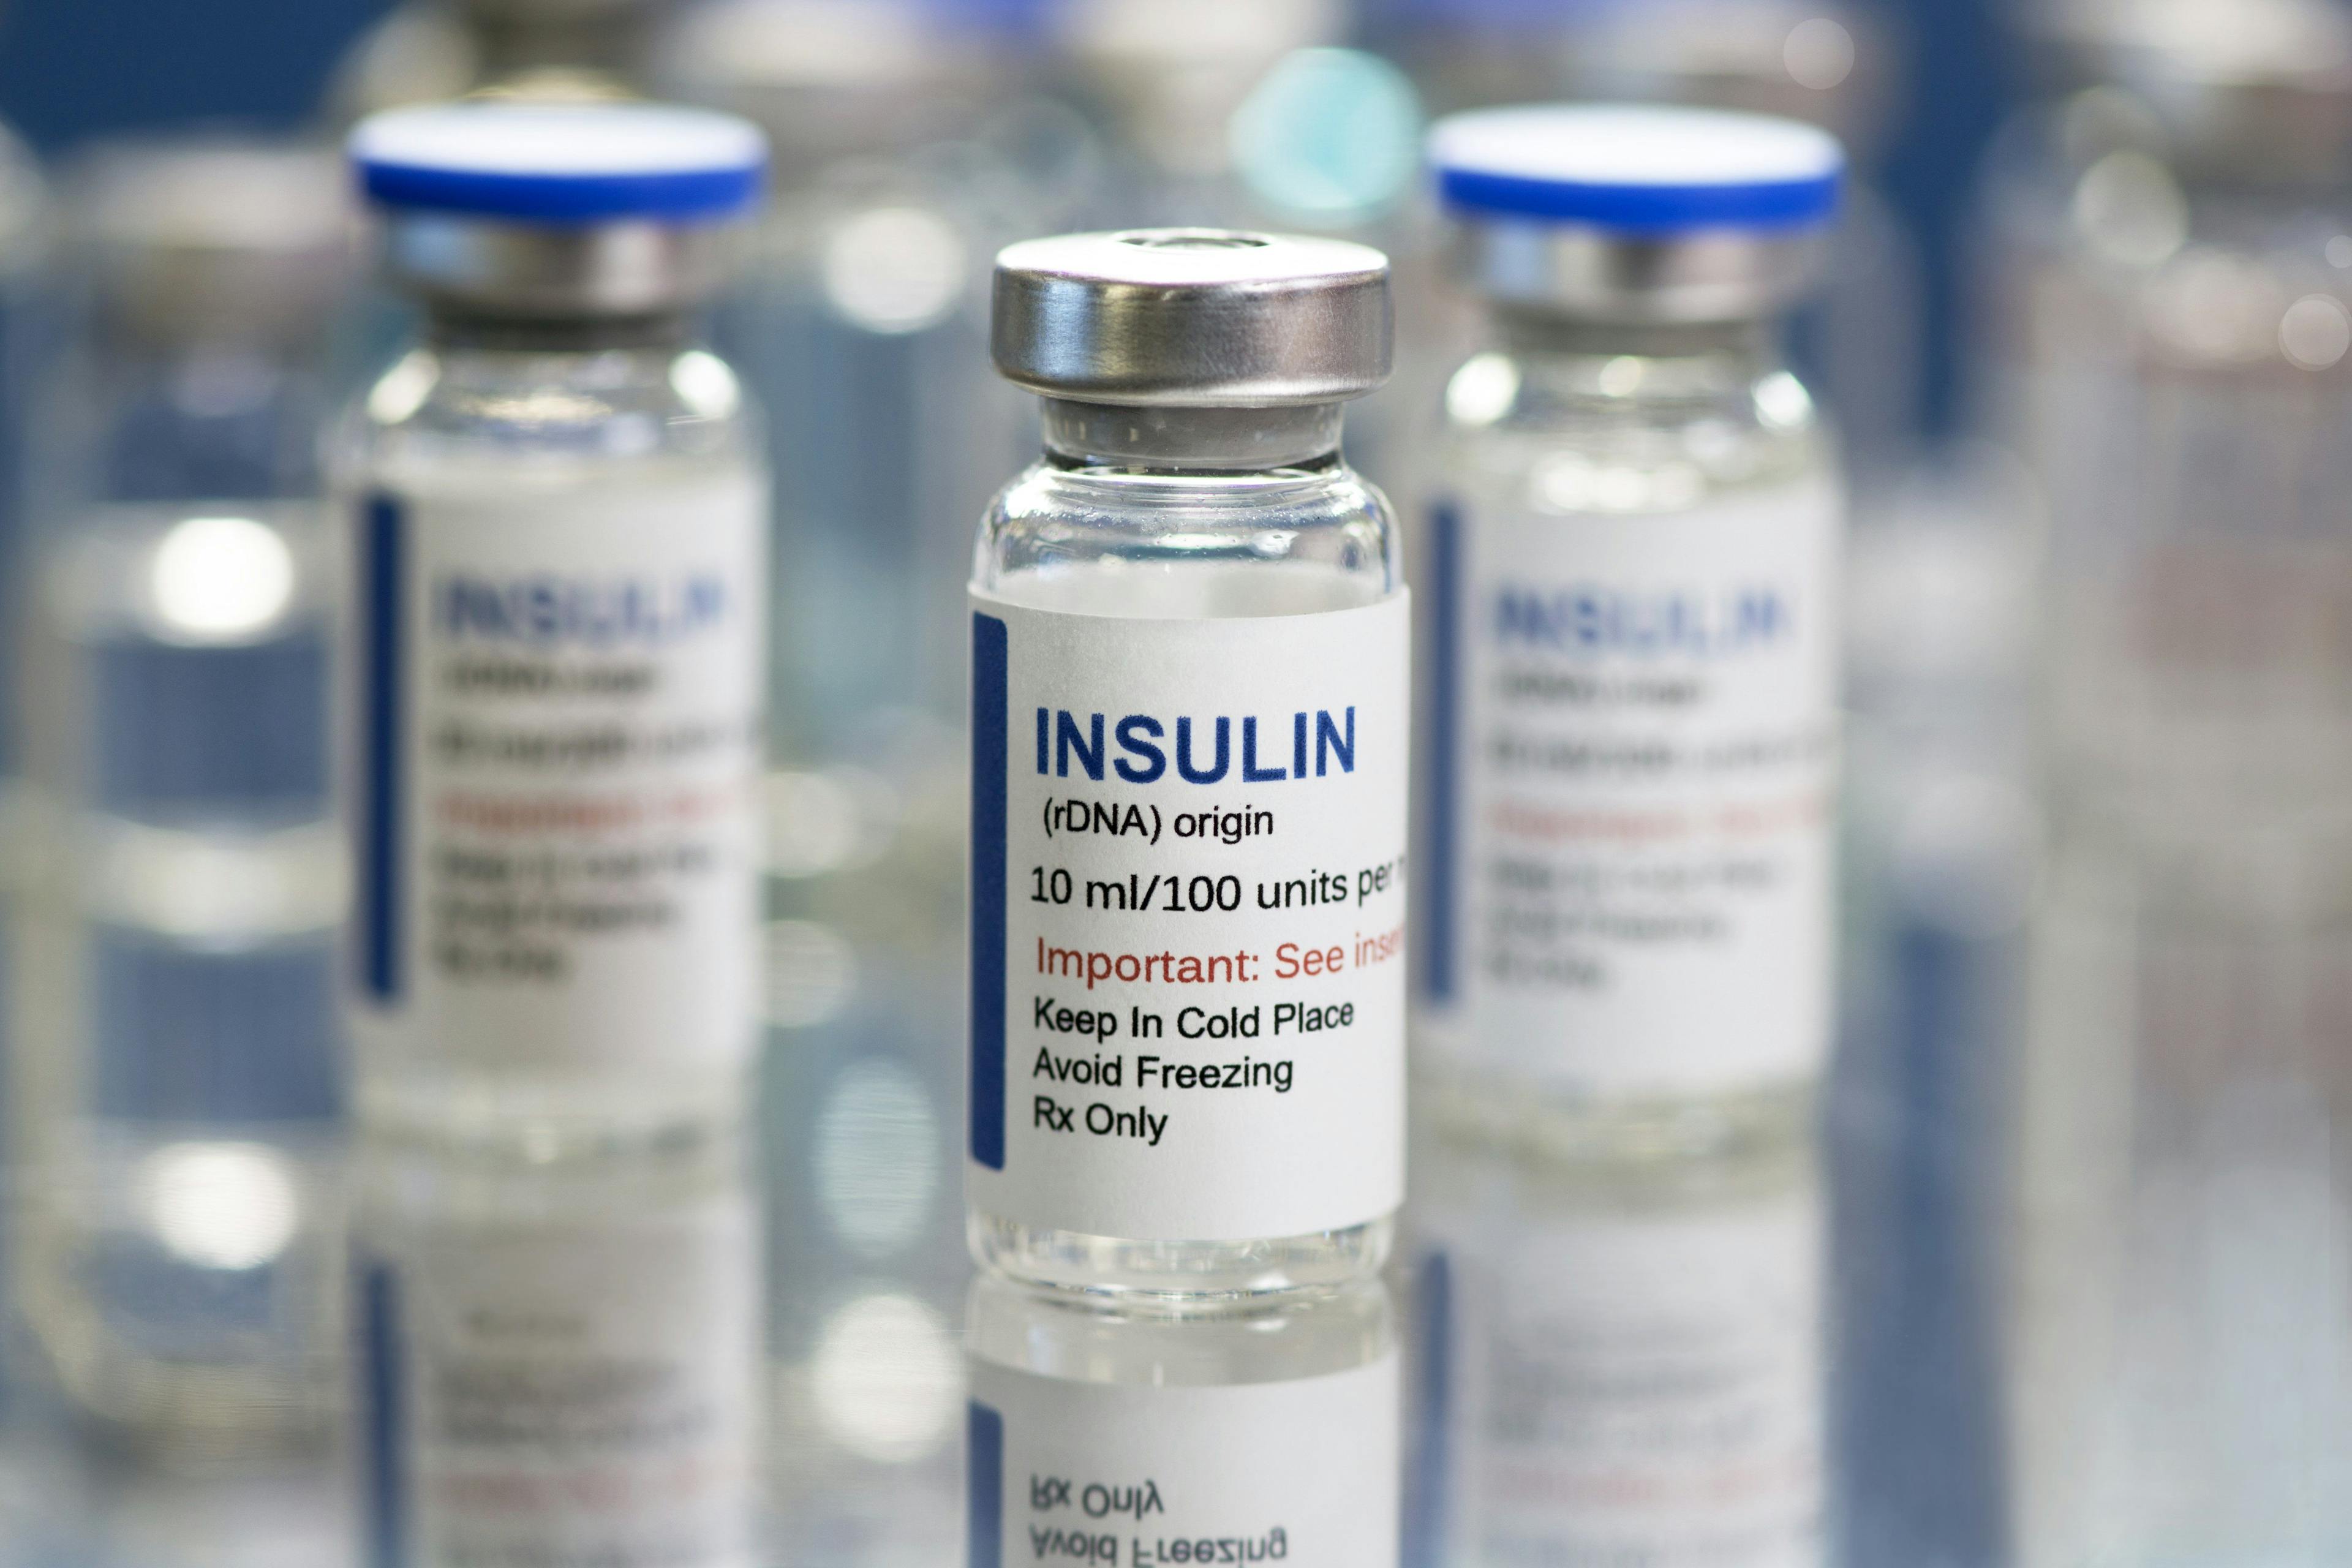 FDA approves first insulin interchangeable biosimilar